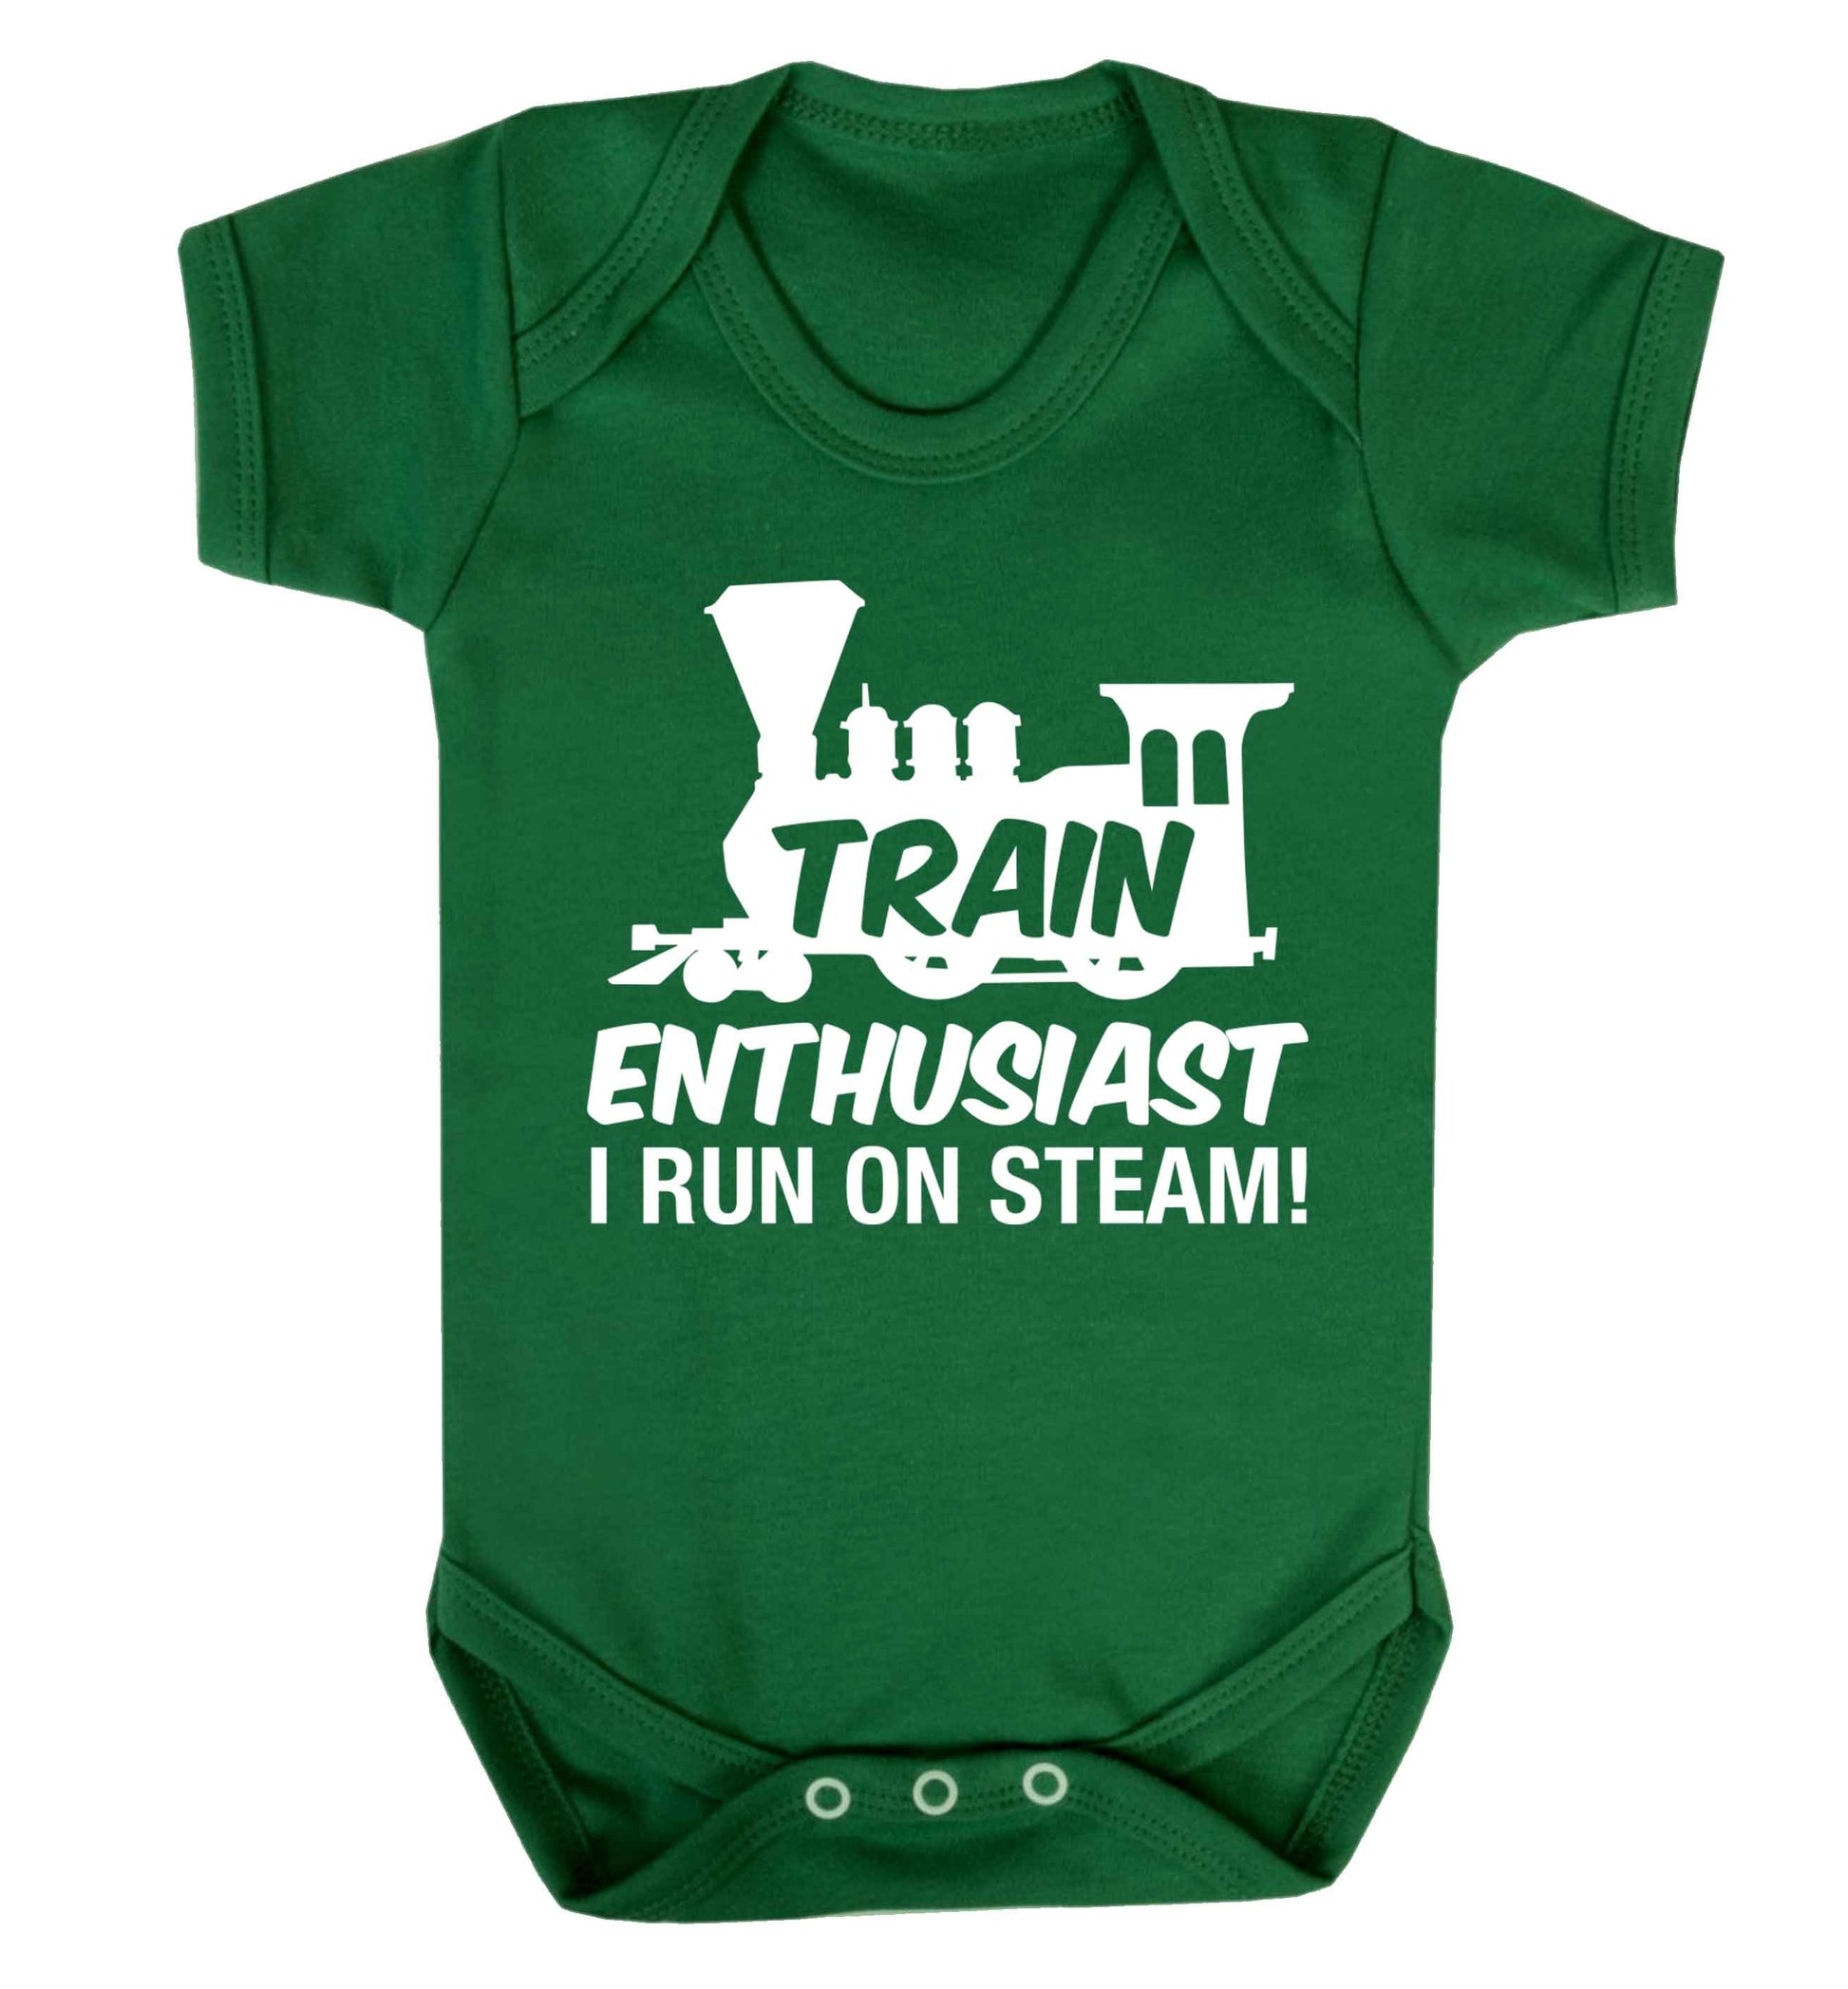 Train enthusiast I run on steam Baby Vest green 18-24 months